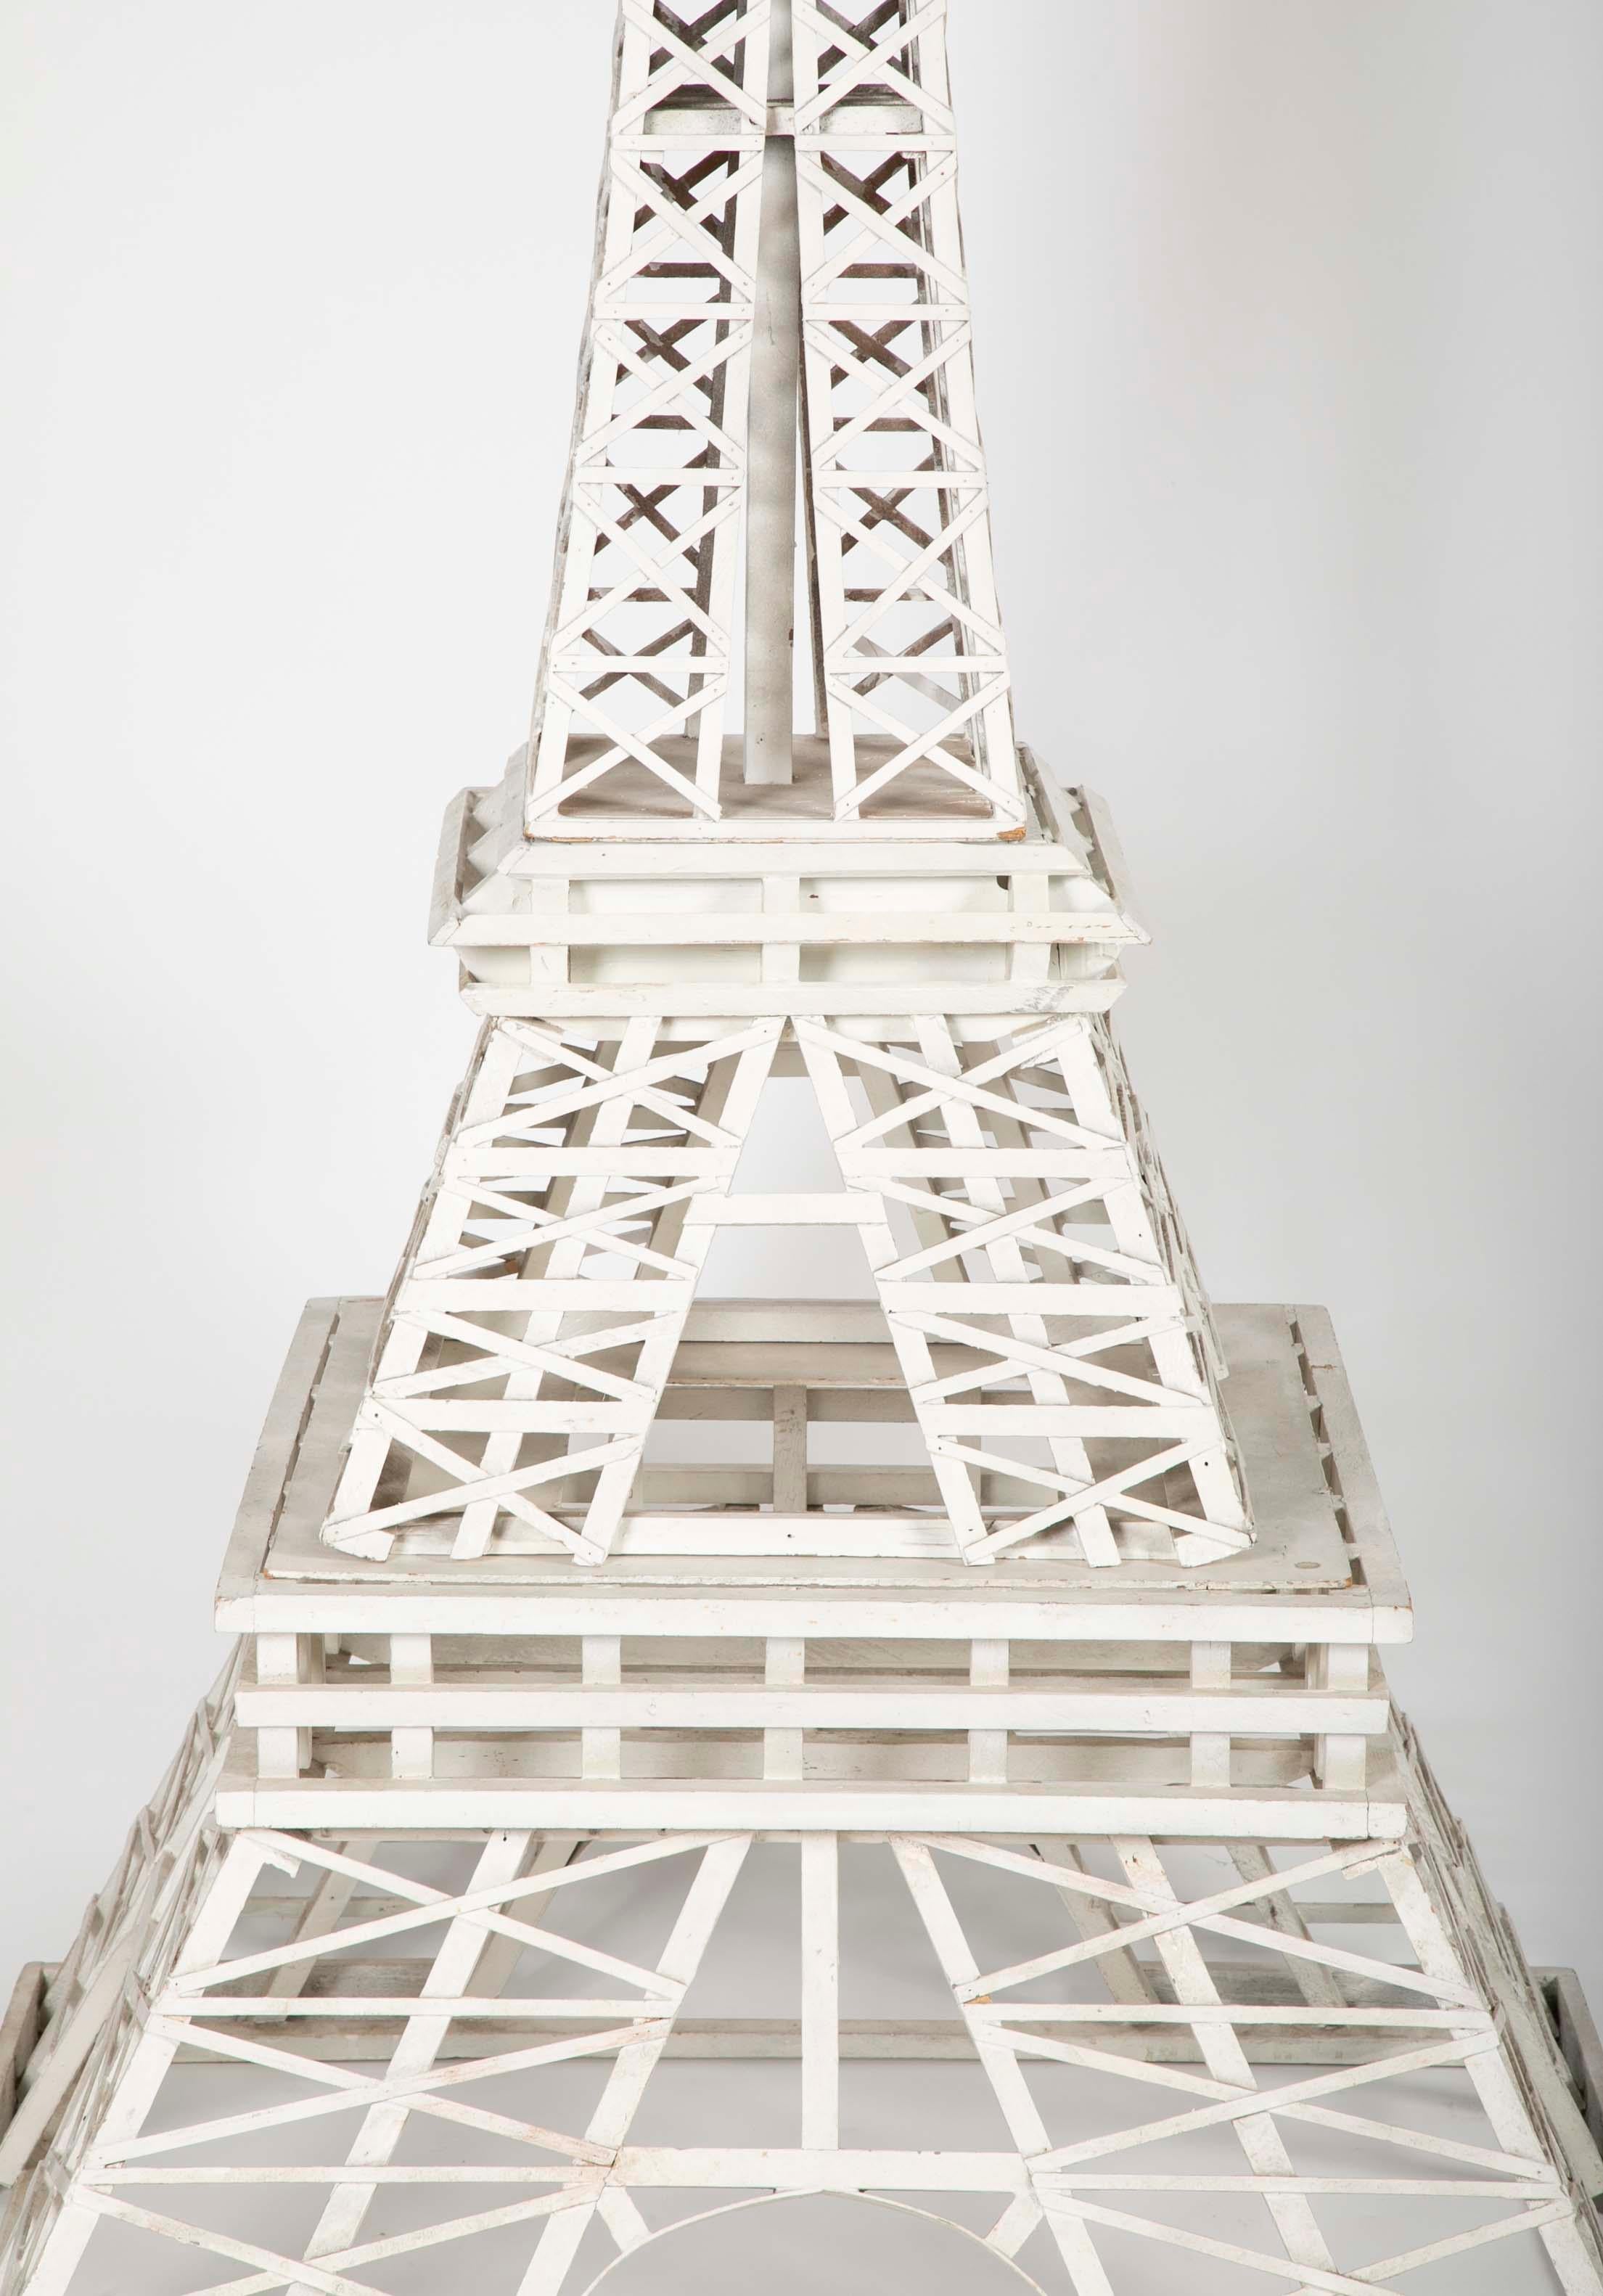 eiffel tower large model